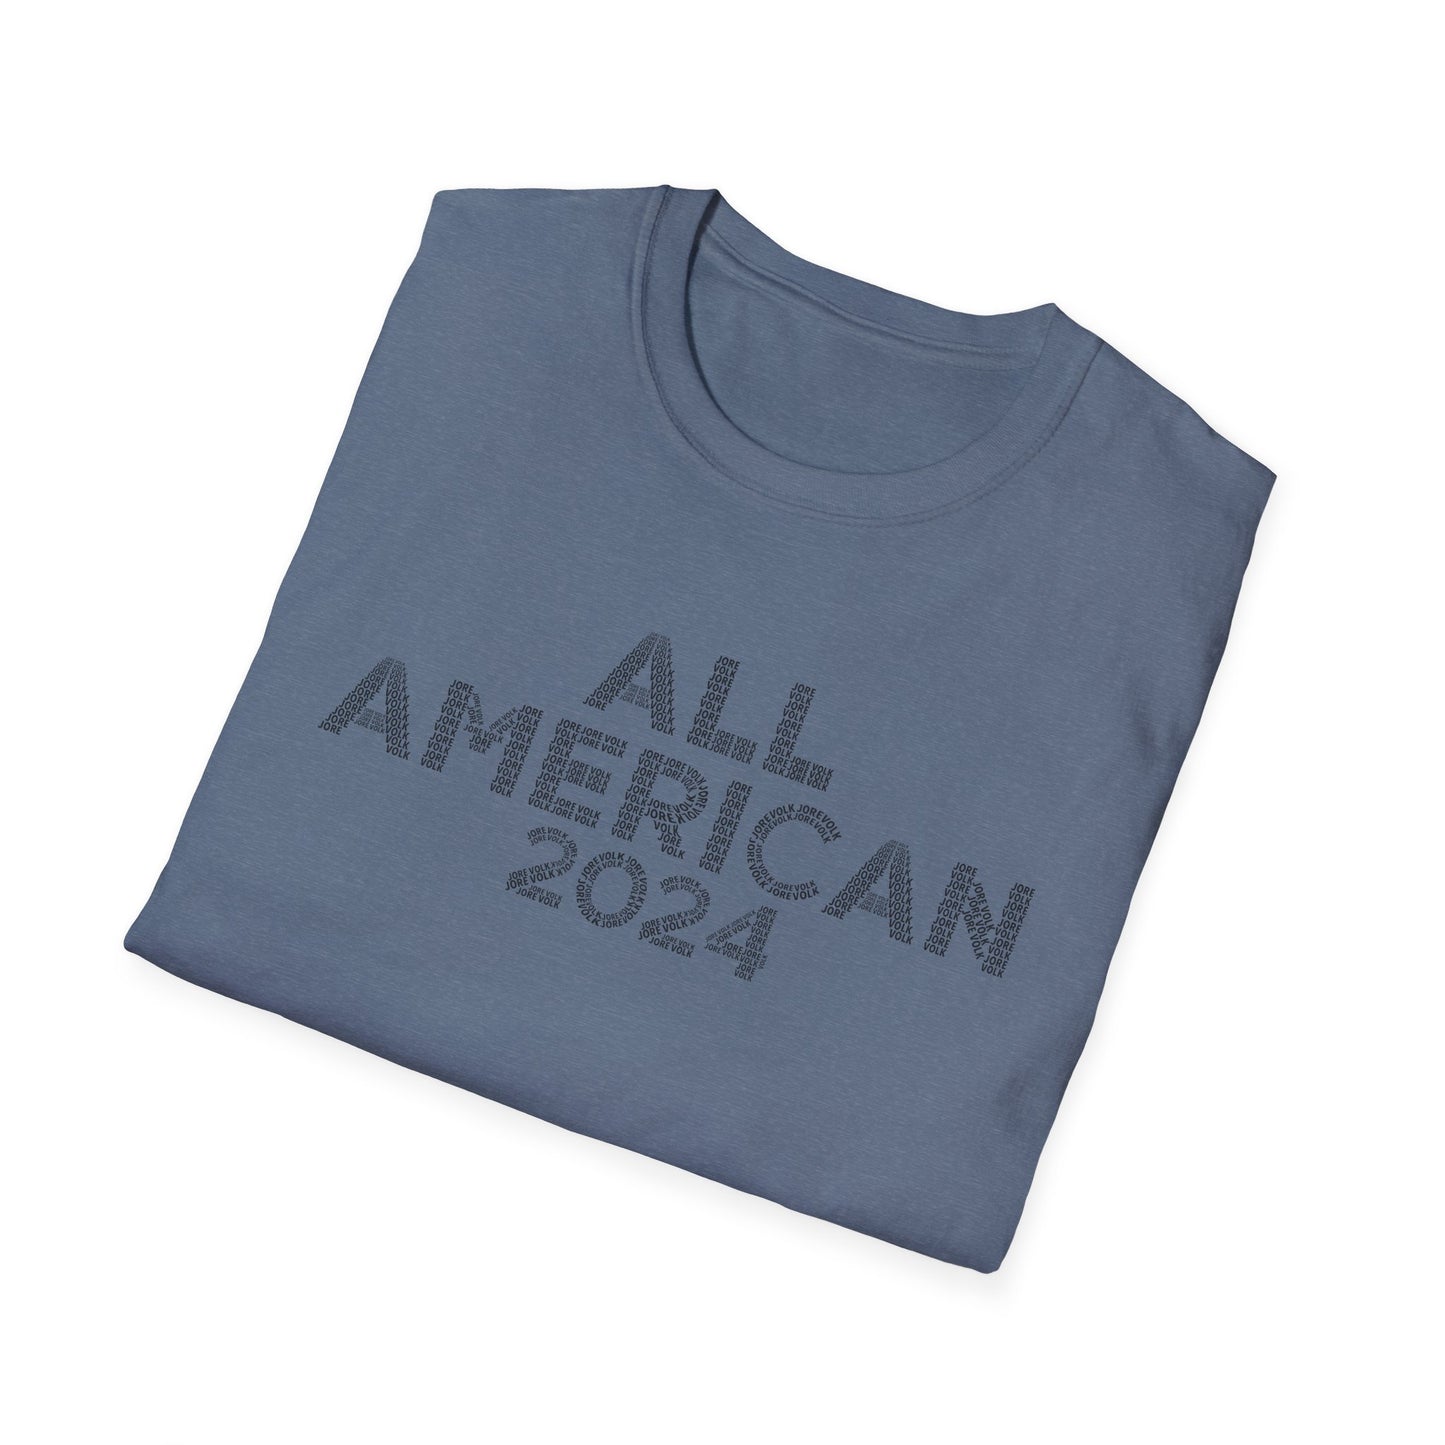 Jore Volk All American Shirt